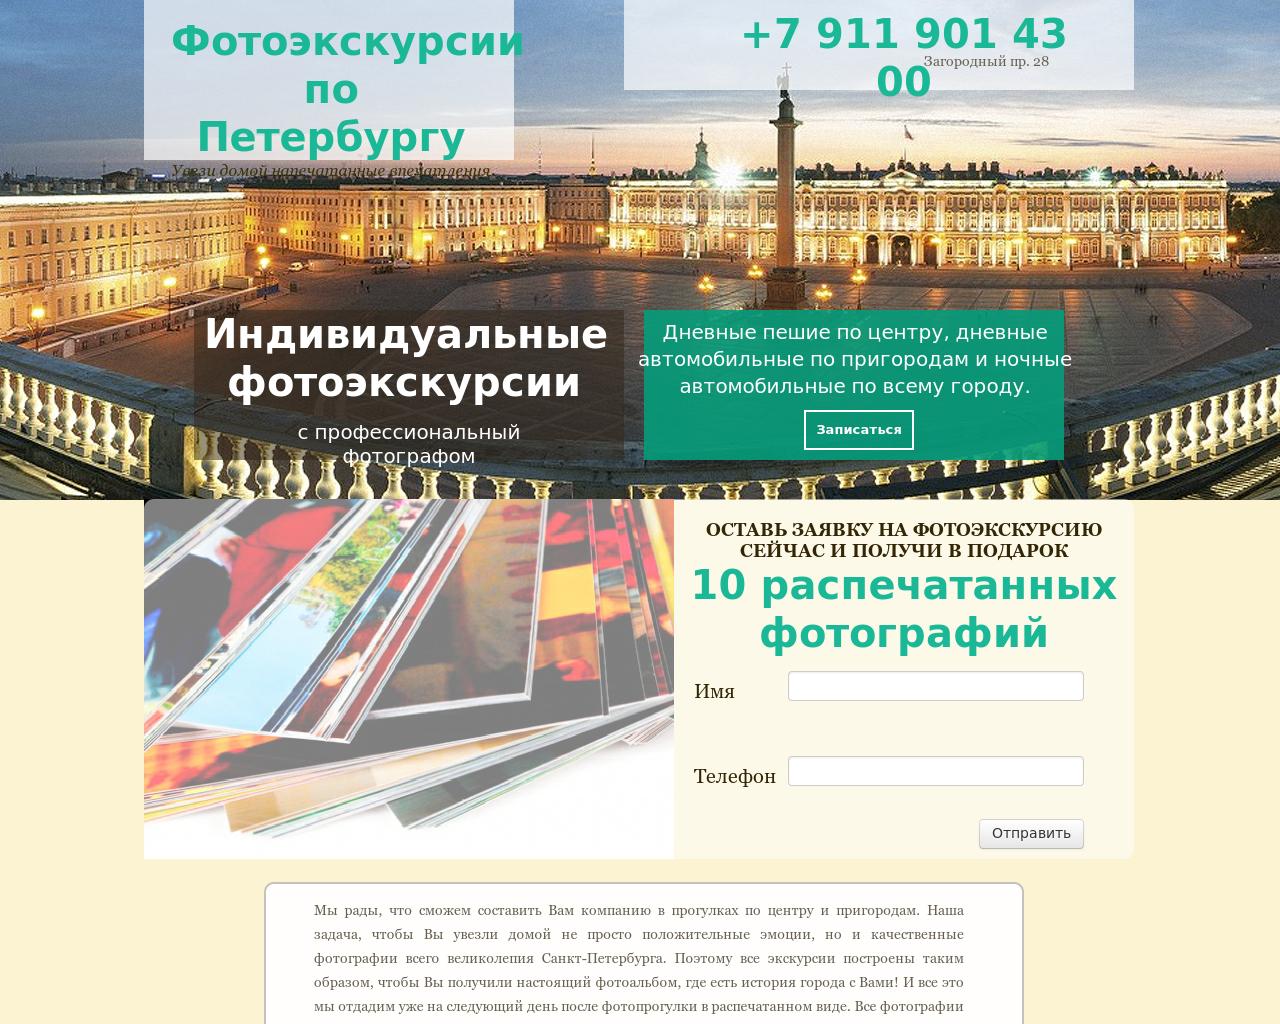 Изображение сайта 2a-print.ru в разрешении 1280x1024